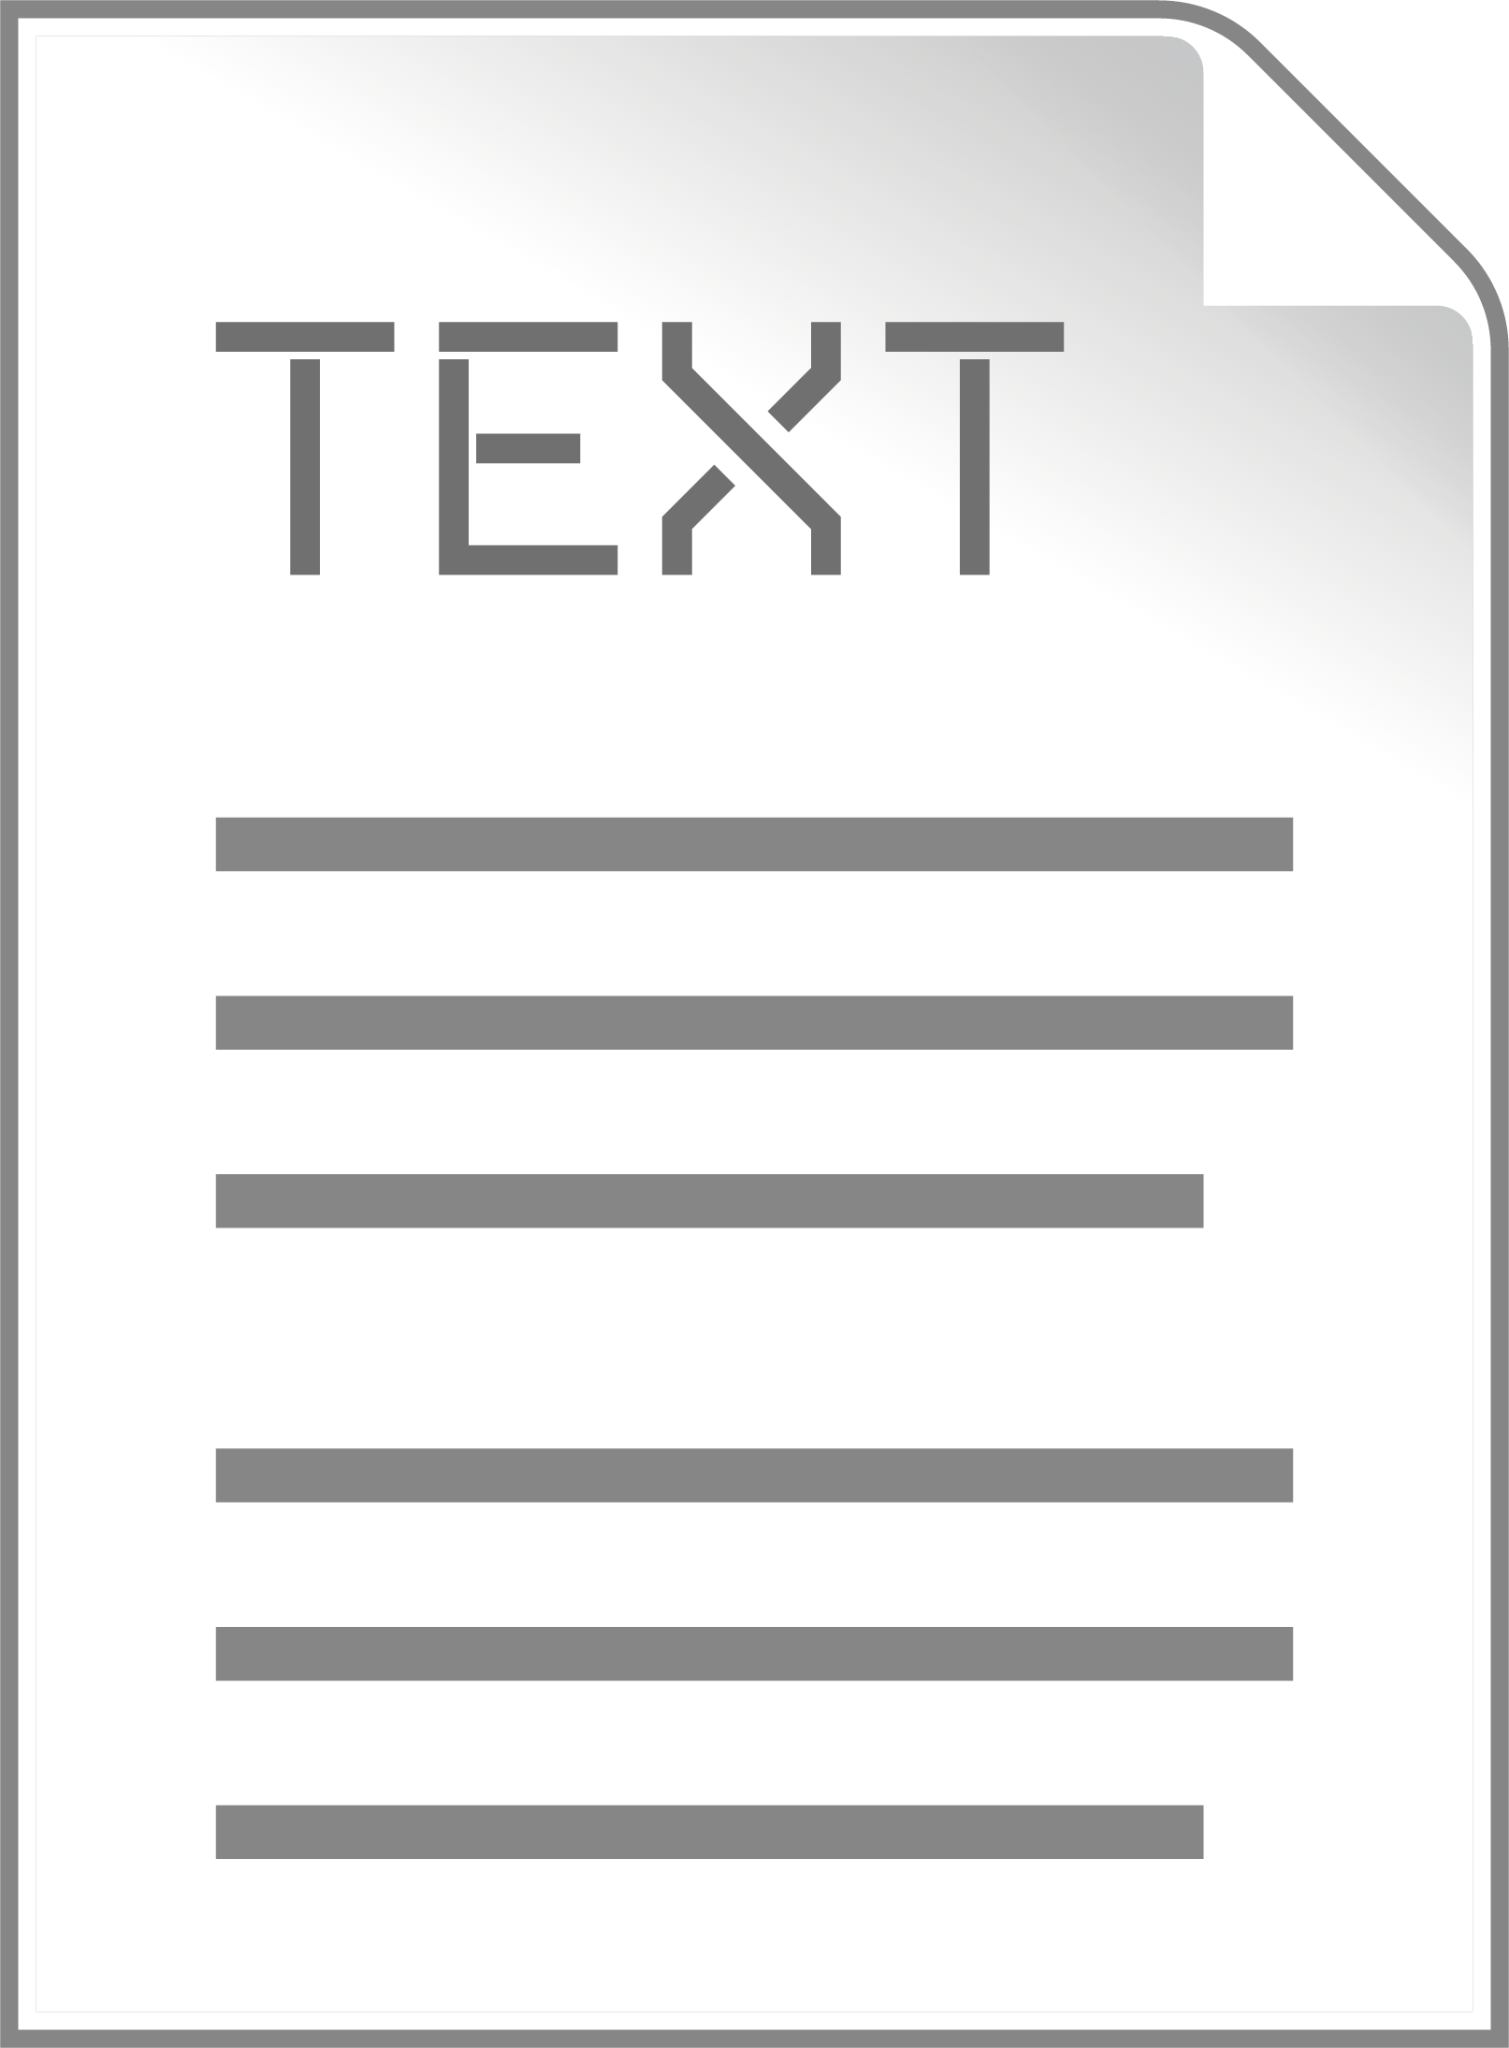 document with text emoji